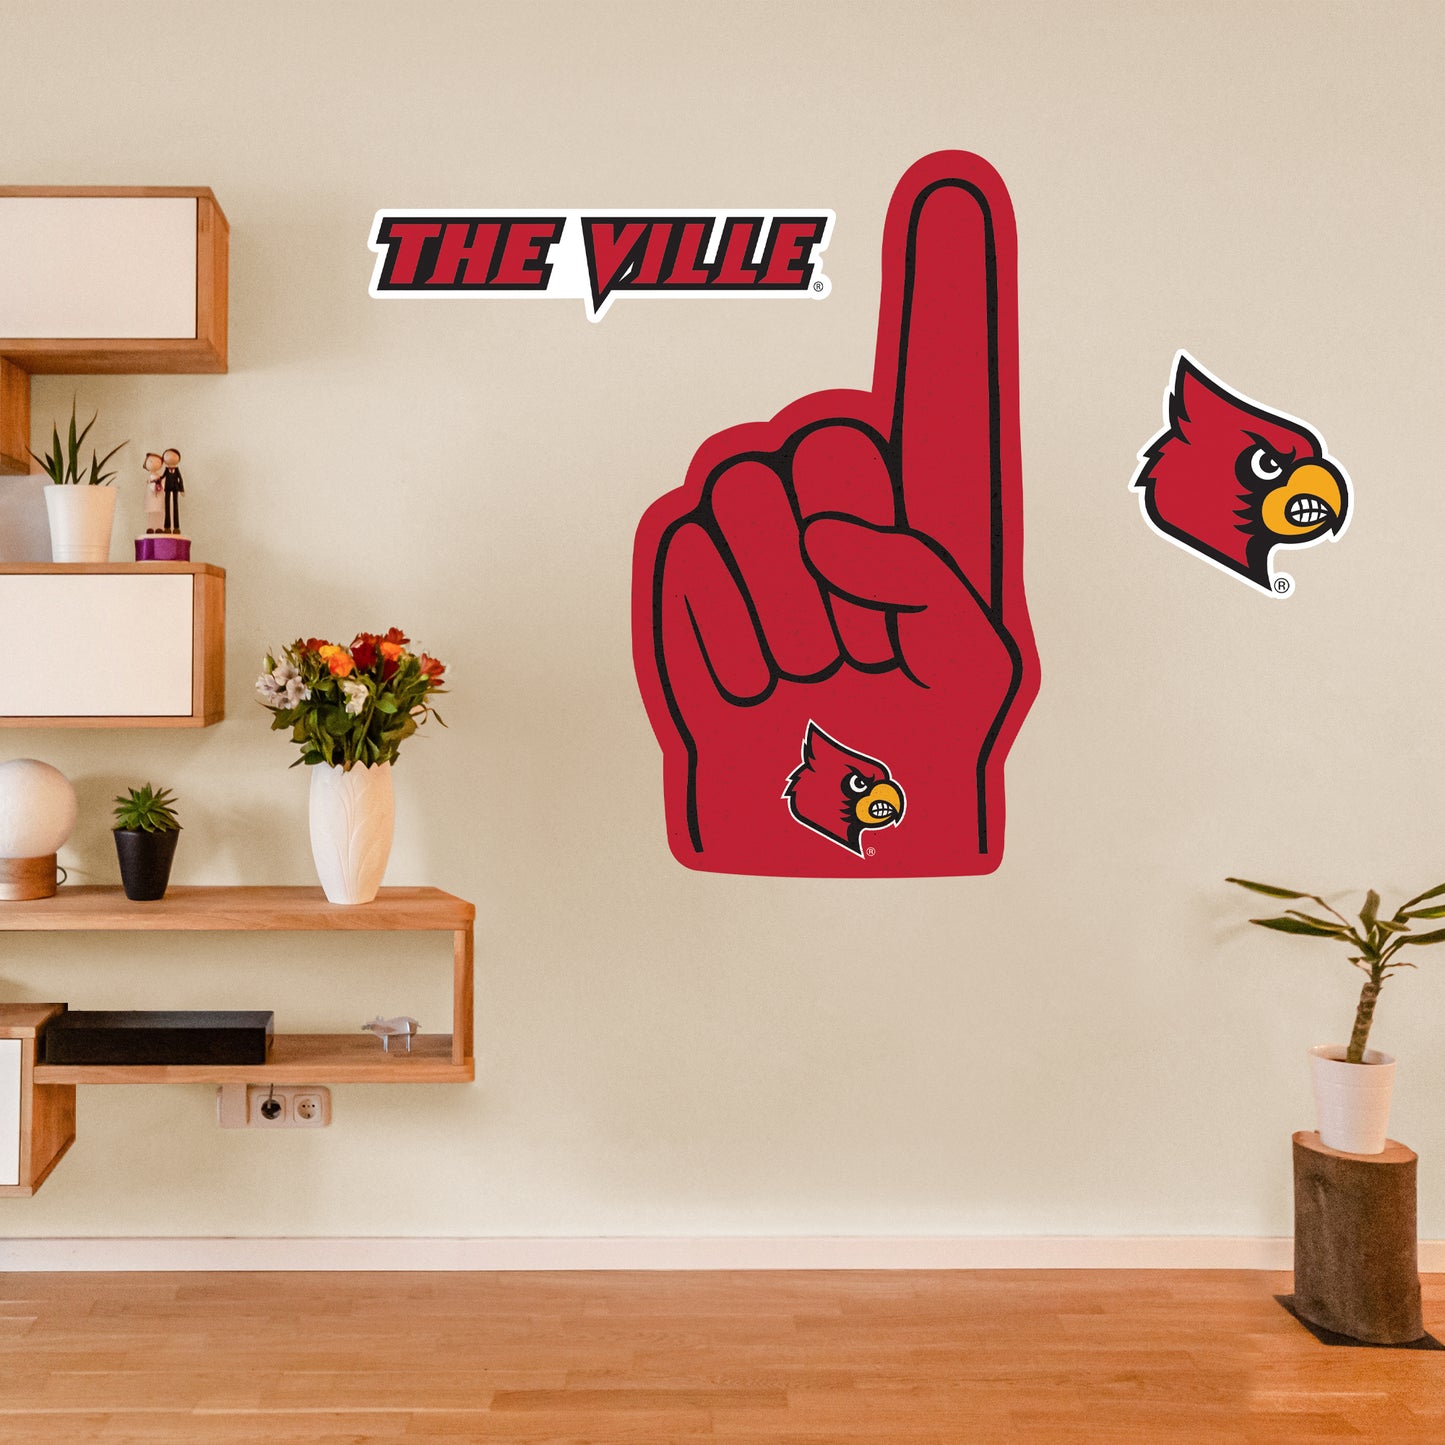 Louisville Cardinals Decal 